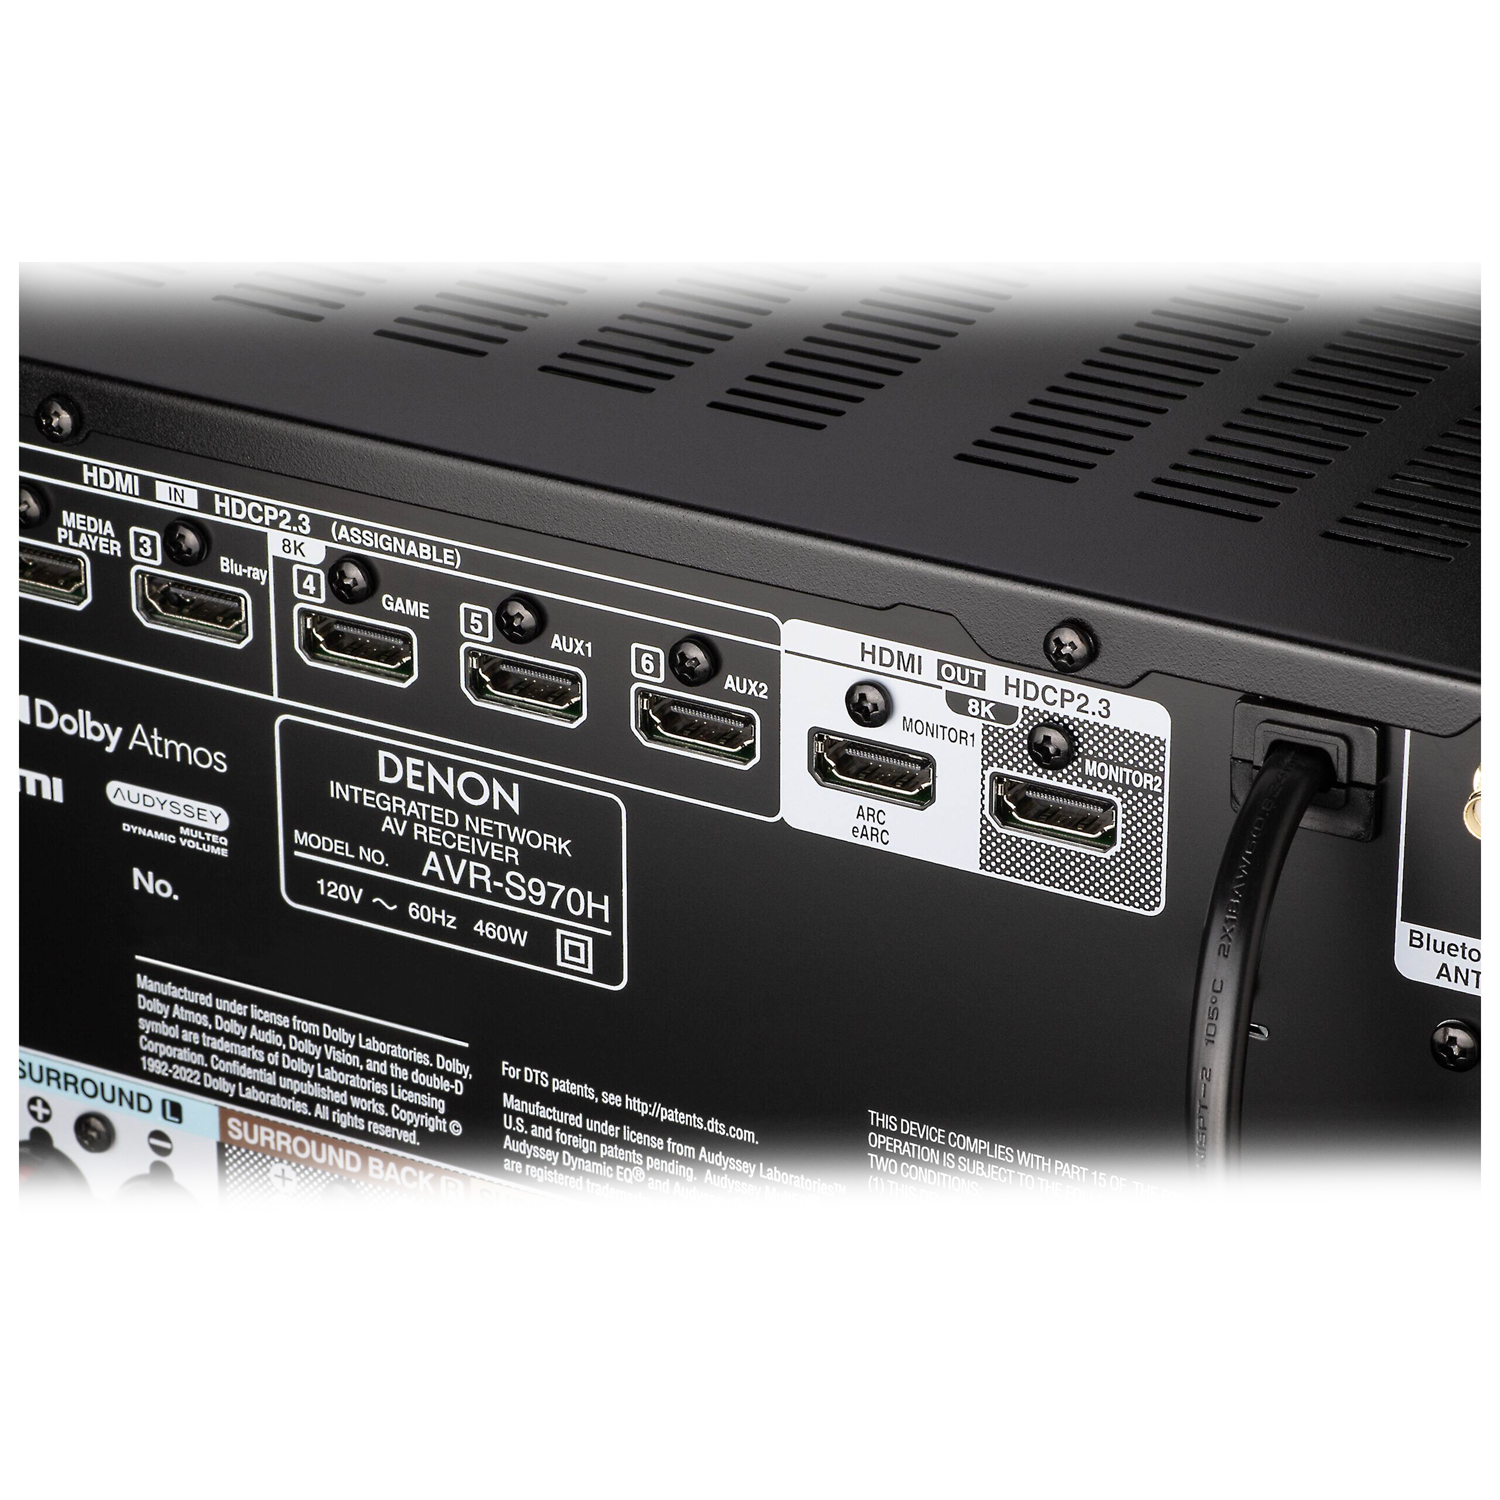 Denon AVR-S970H 8K Ultra HD 7.2 Channel (90Watt X 7) AV Receiver 2020 Model  - Built for Gaming, Music Streaming, 3D Audio & Video, Alexa + HEOS, Black